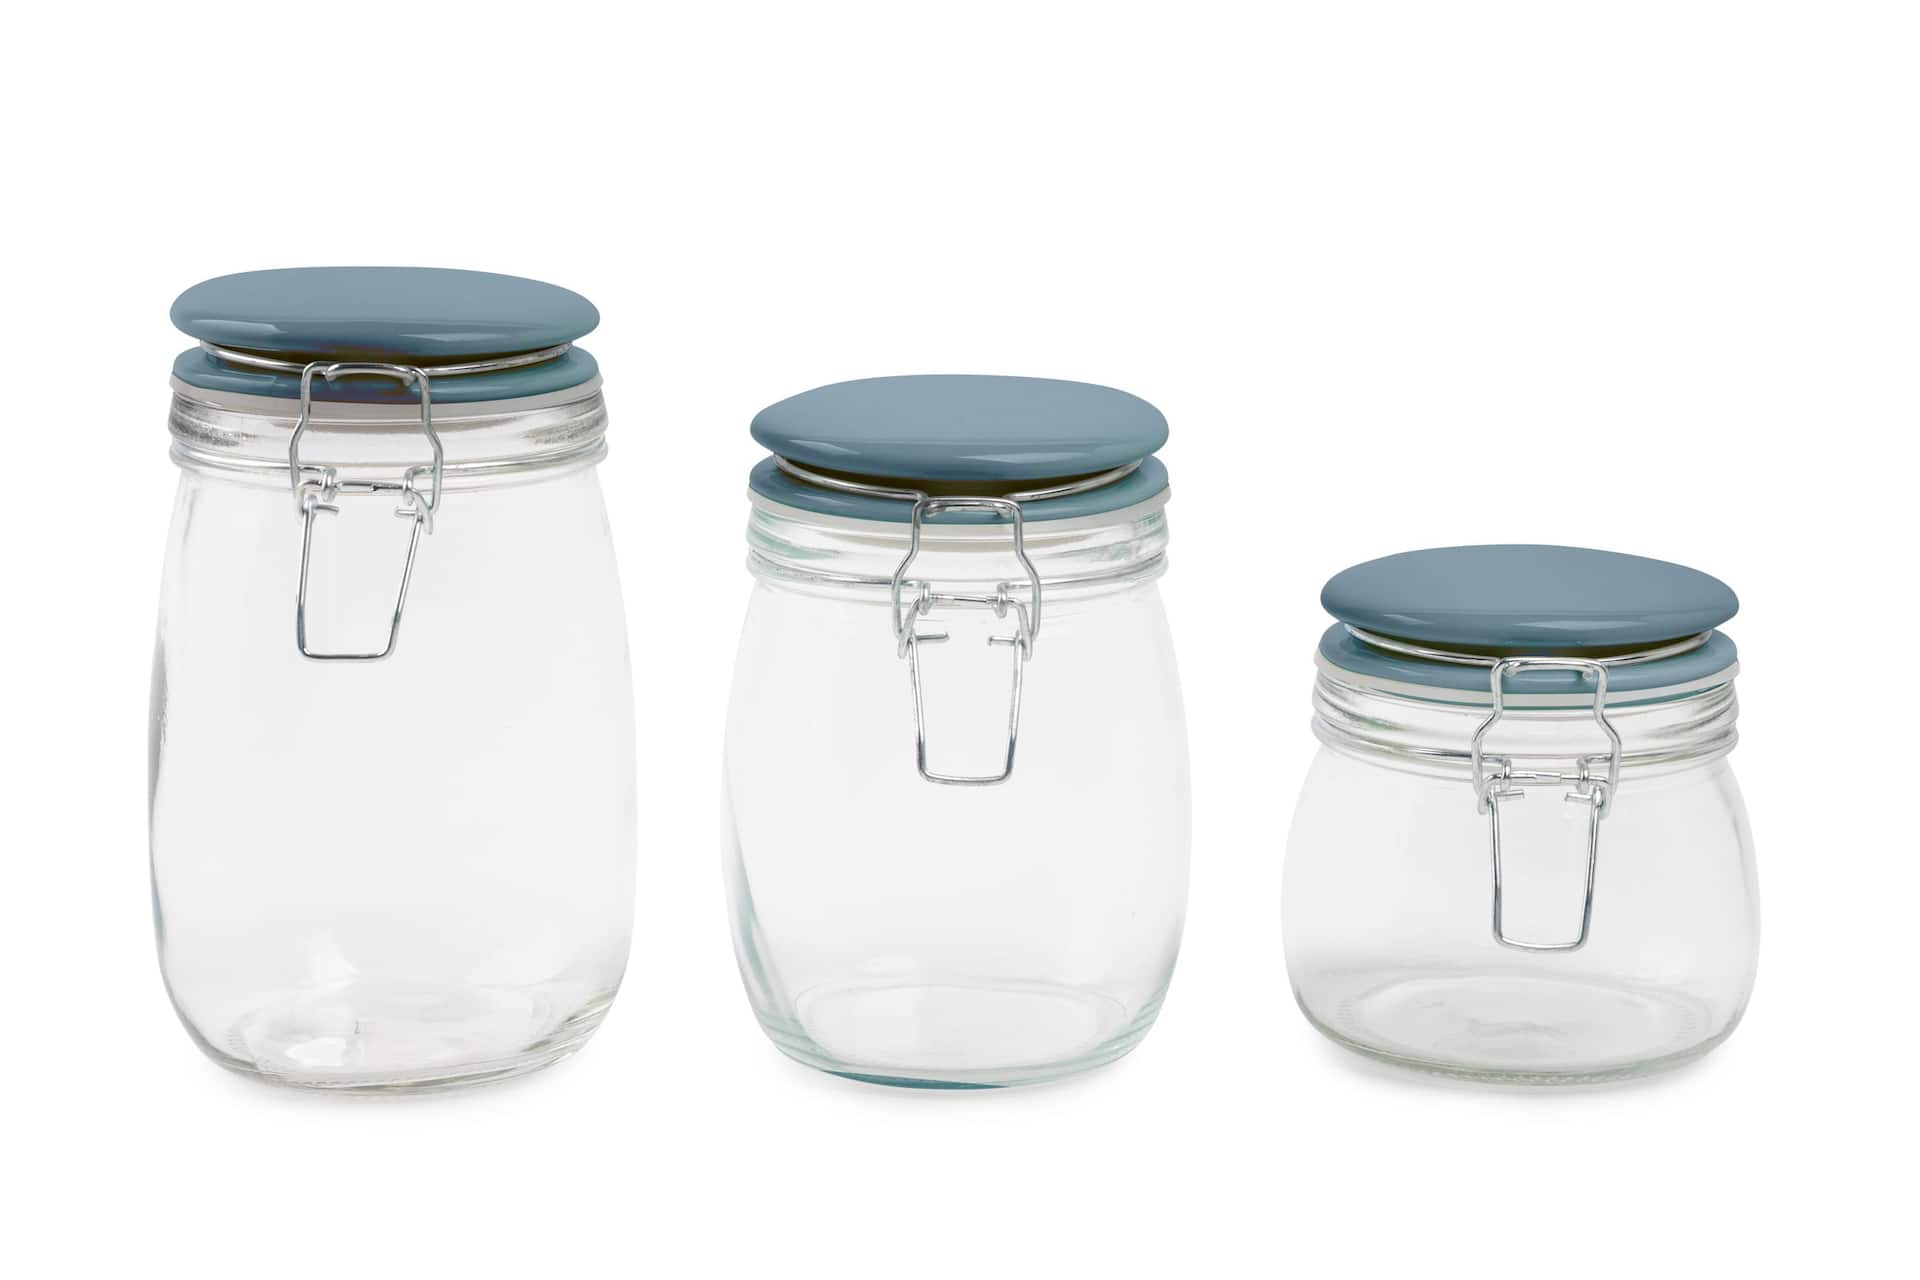 Mason Craft & More 1L Set of 2 Clamp Jars